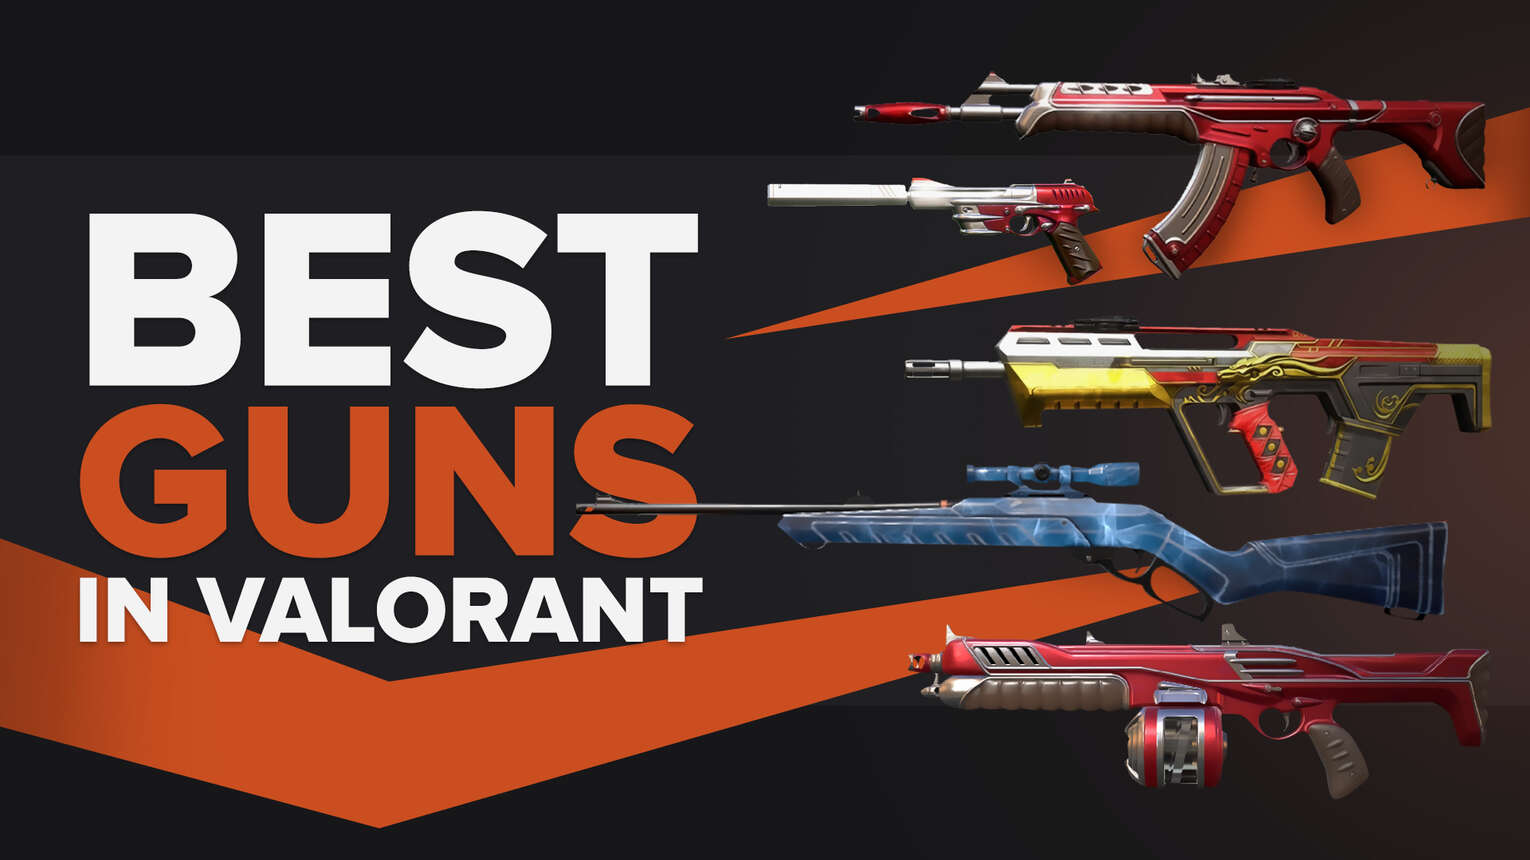 The Best Guns in Valorant Tier List